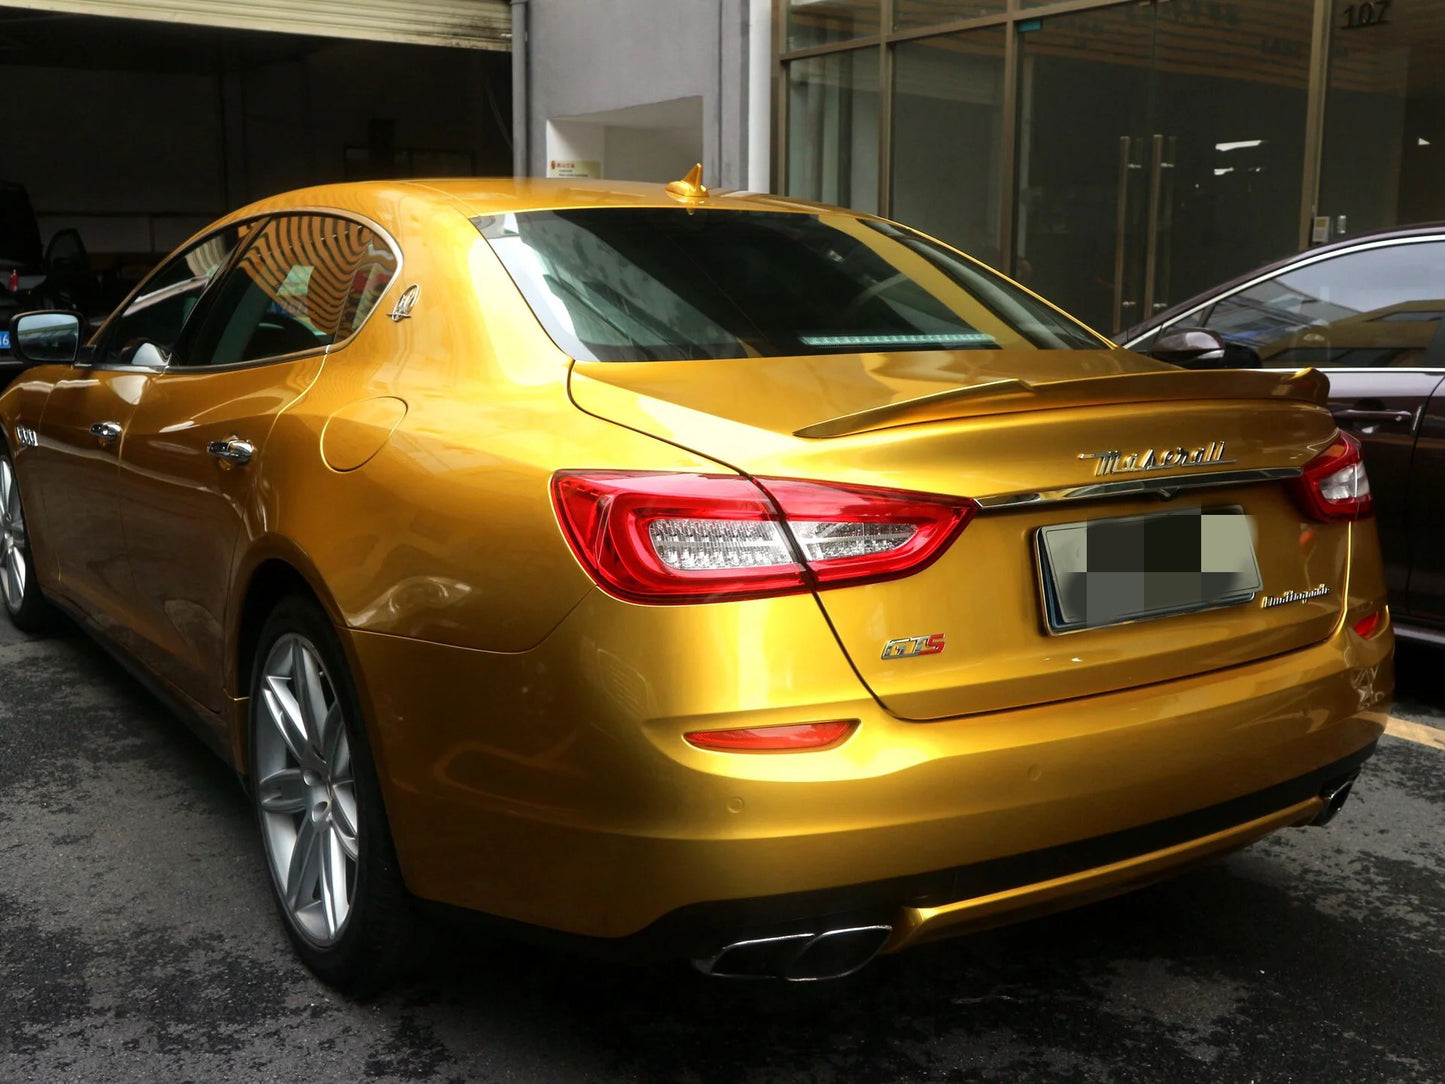 Gloss Metallic Amber Gold Car Wrap